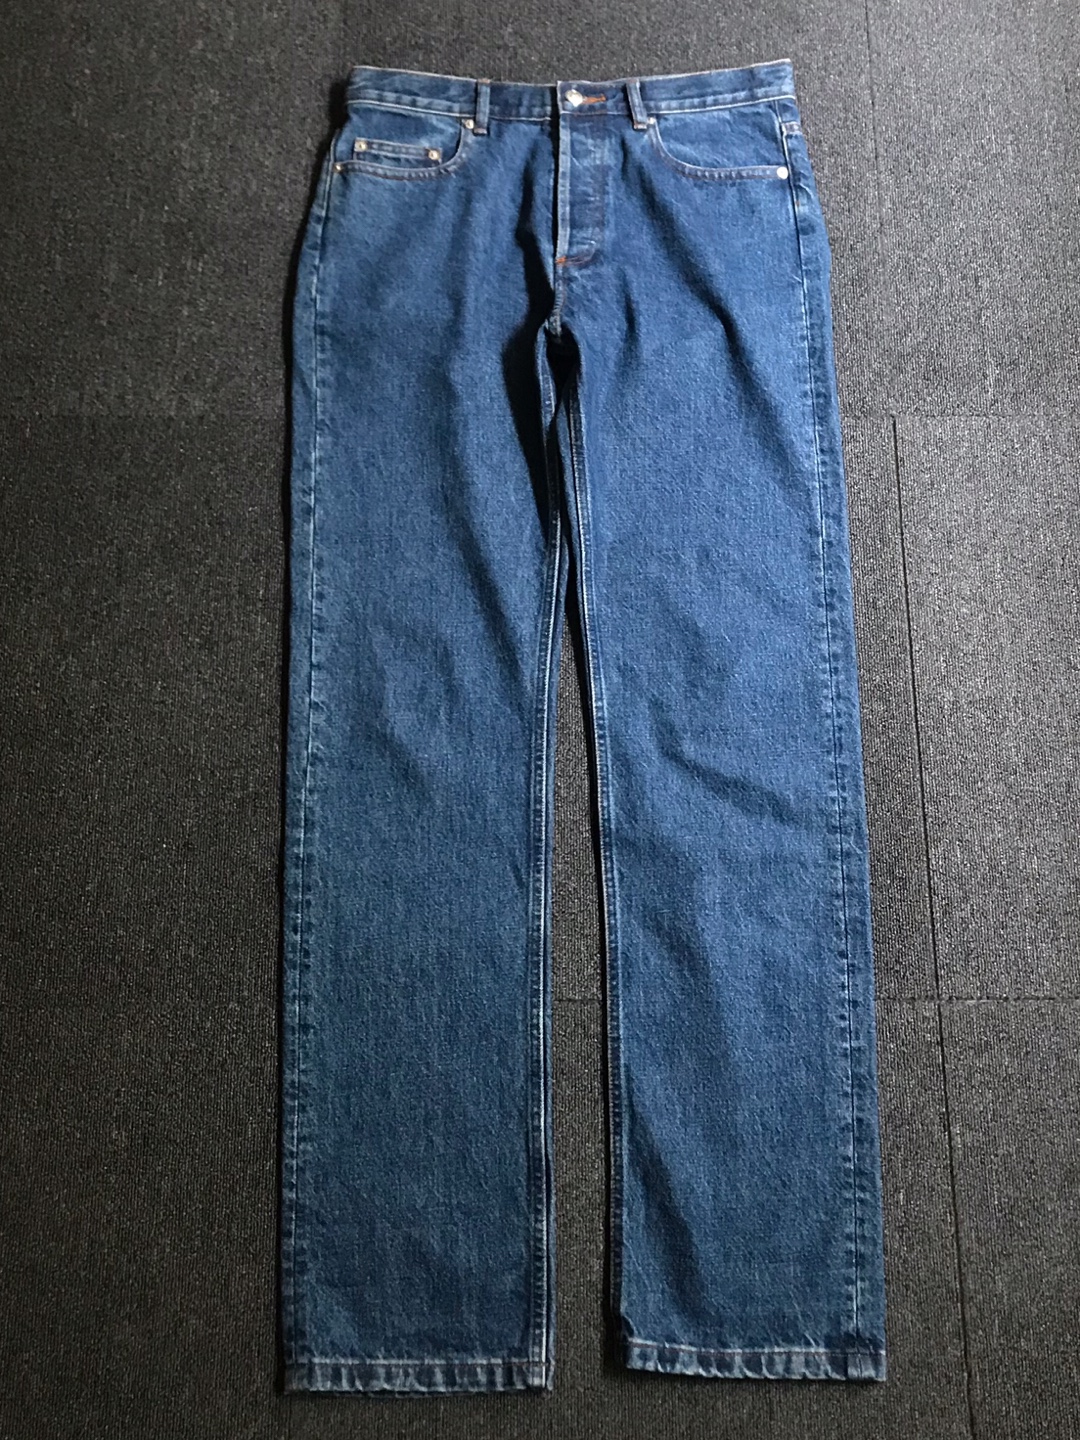 apc standard jeans (31 size, ~33인치 추천)